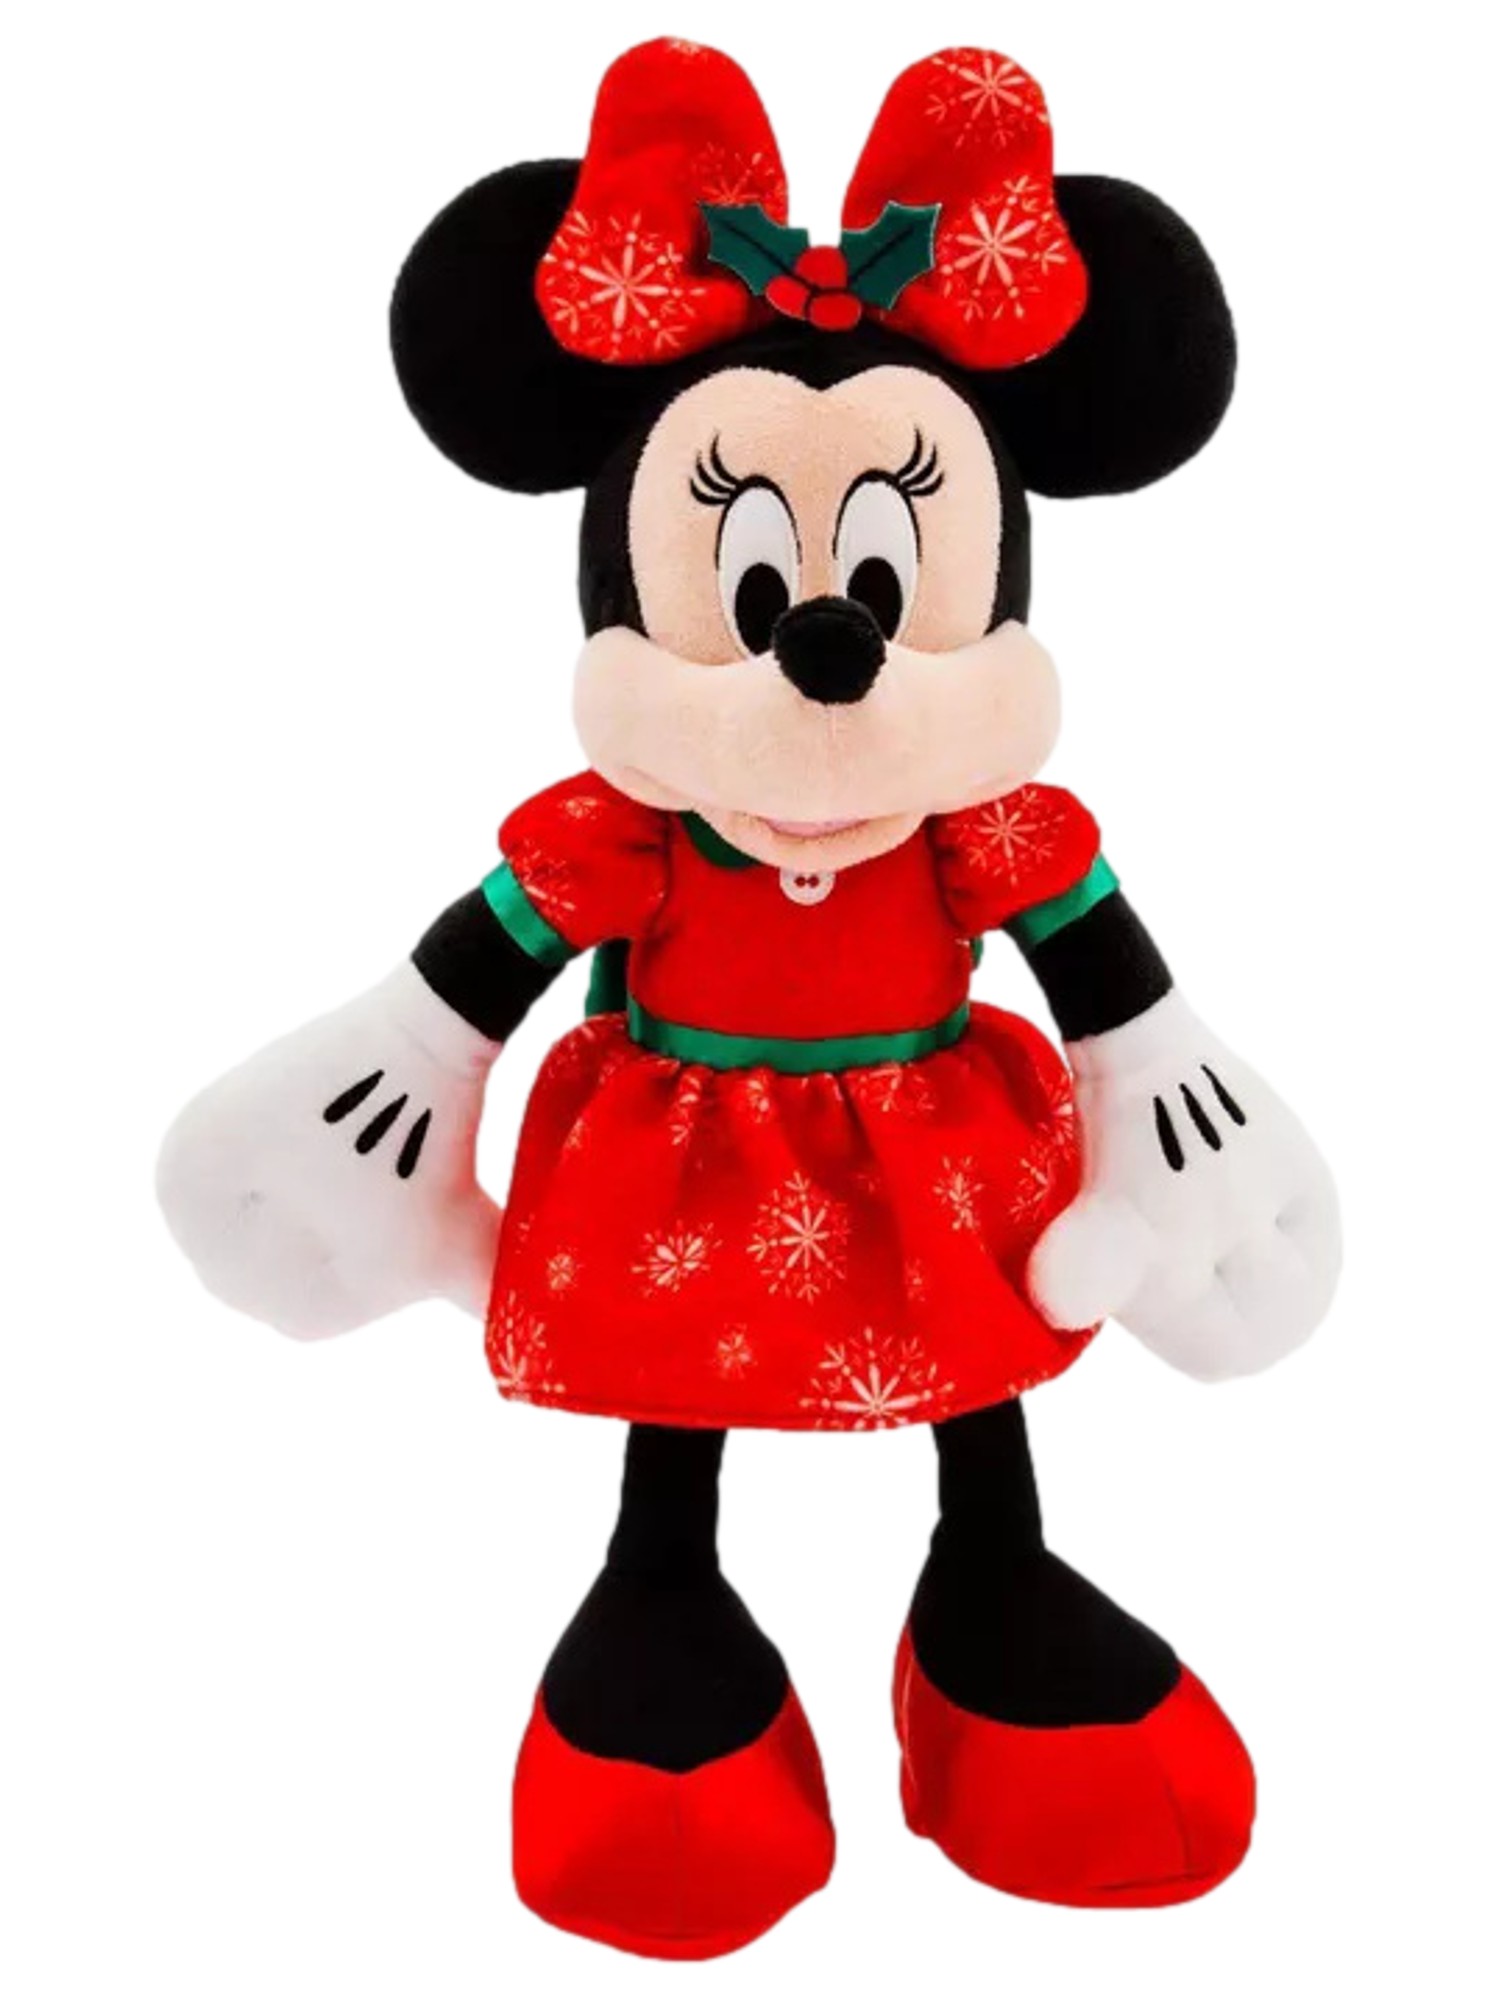 Disney Minnie Mouse Christmas Plush 12 inch Stuffed Animal Pal